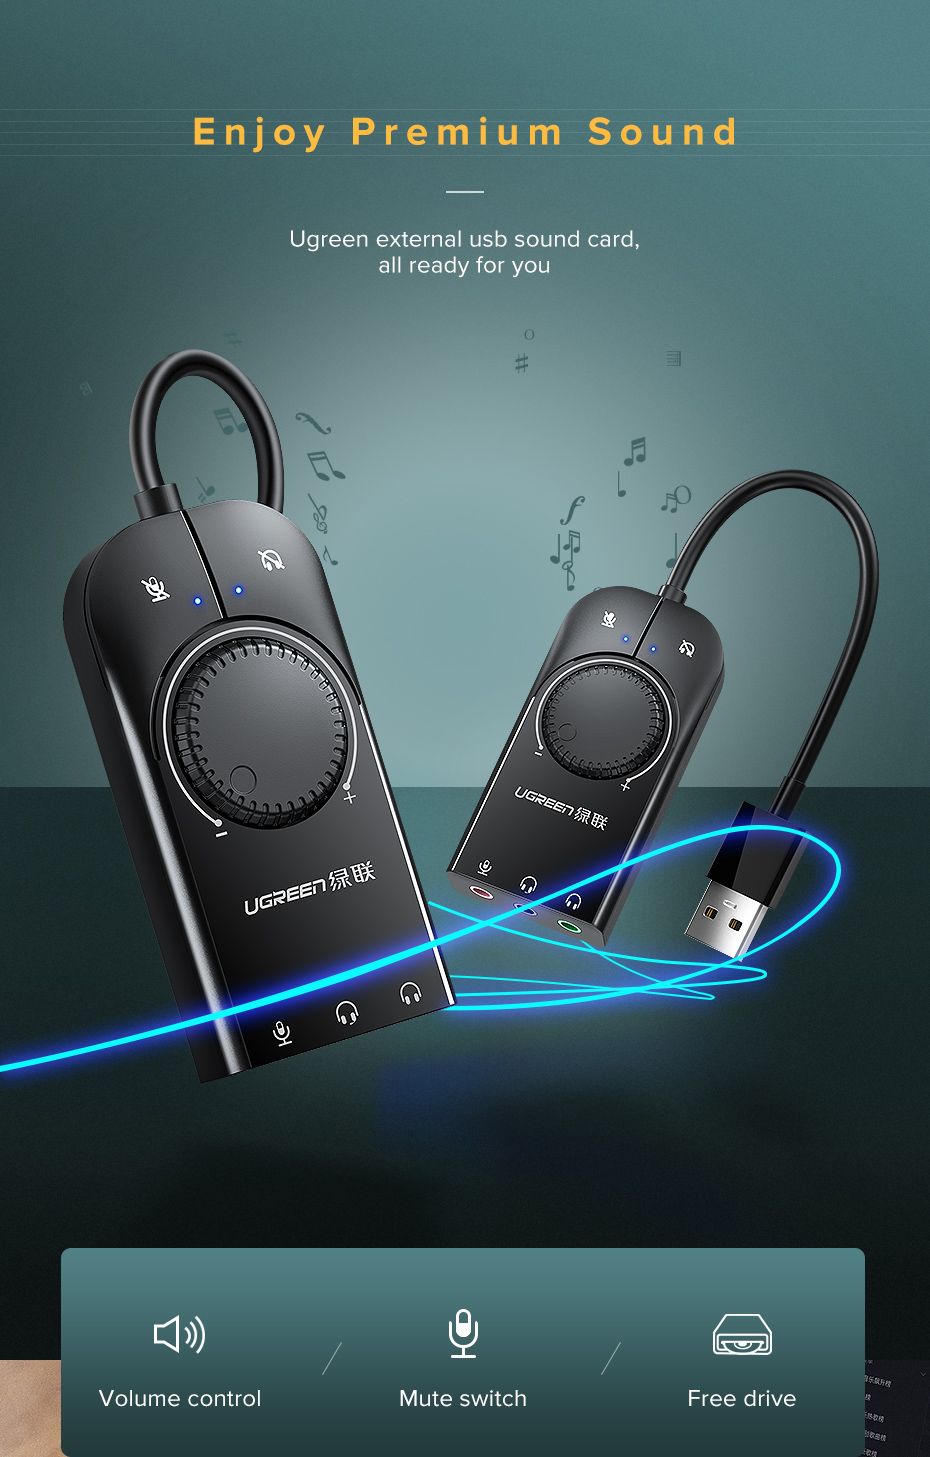 Ugreen-USB-Audio-Interface-35mm-Microphone-Audio-Adapter-Soundcard-External-Sound-Card-for-Laptop-PS-1662752